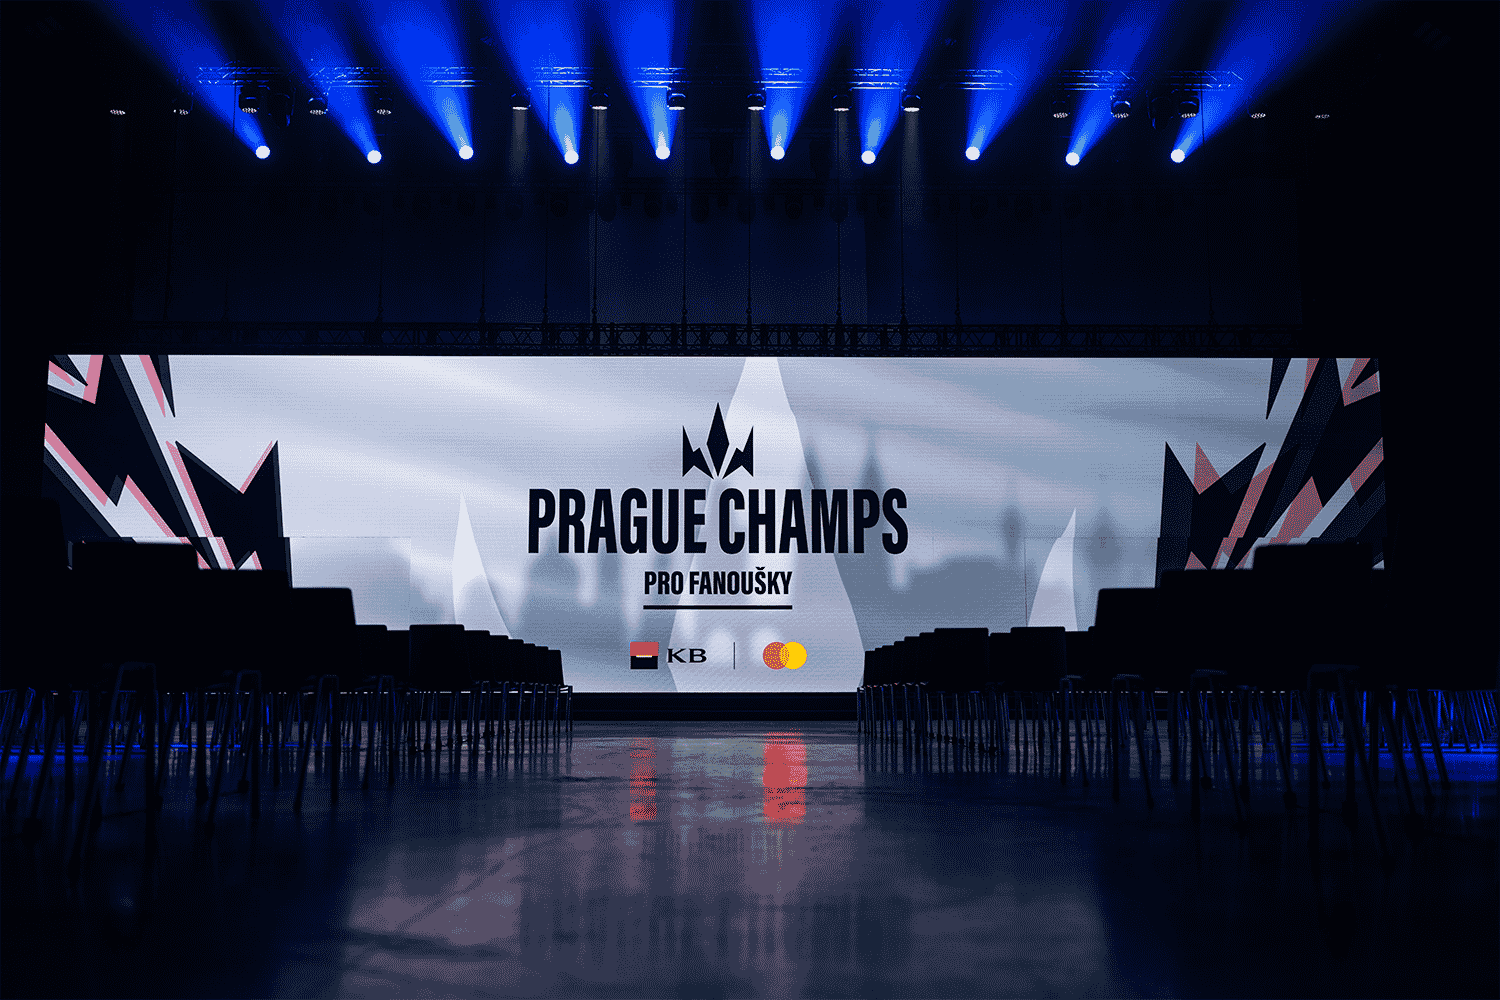 Prague Champs